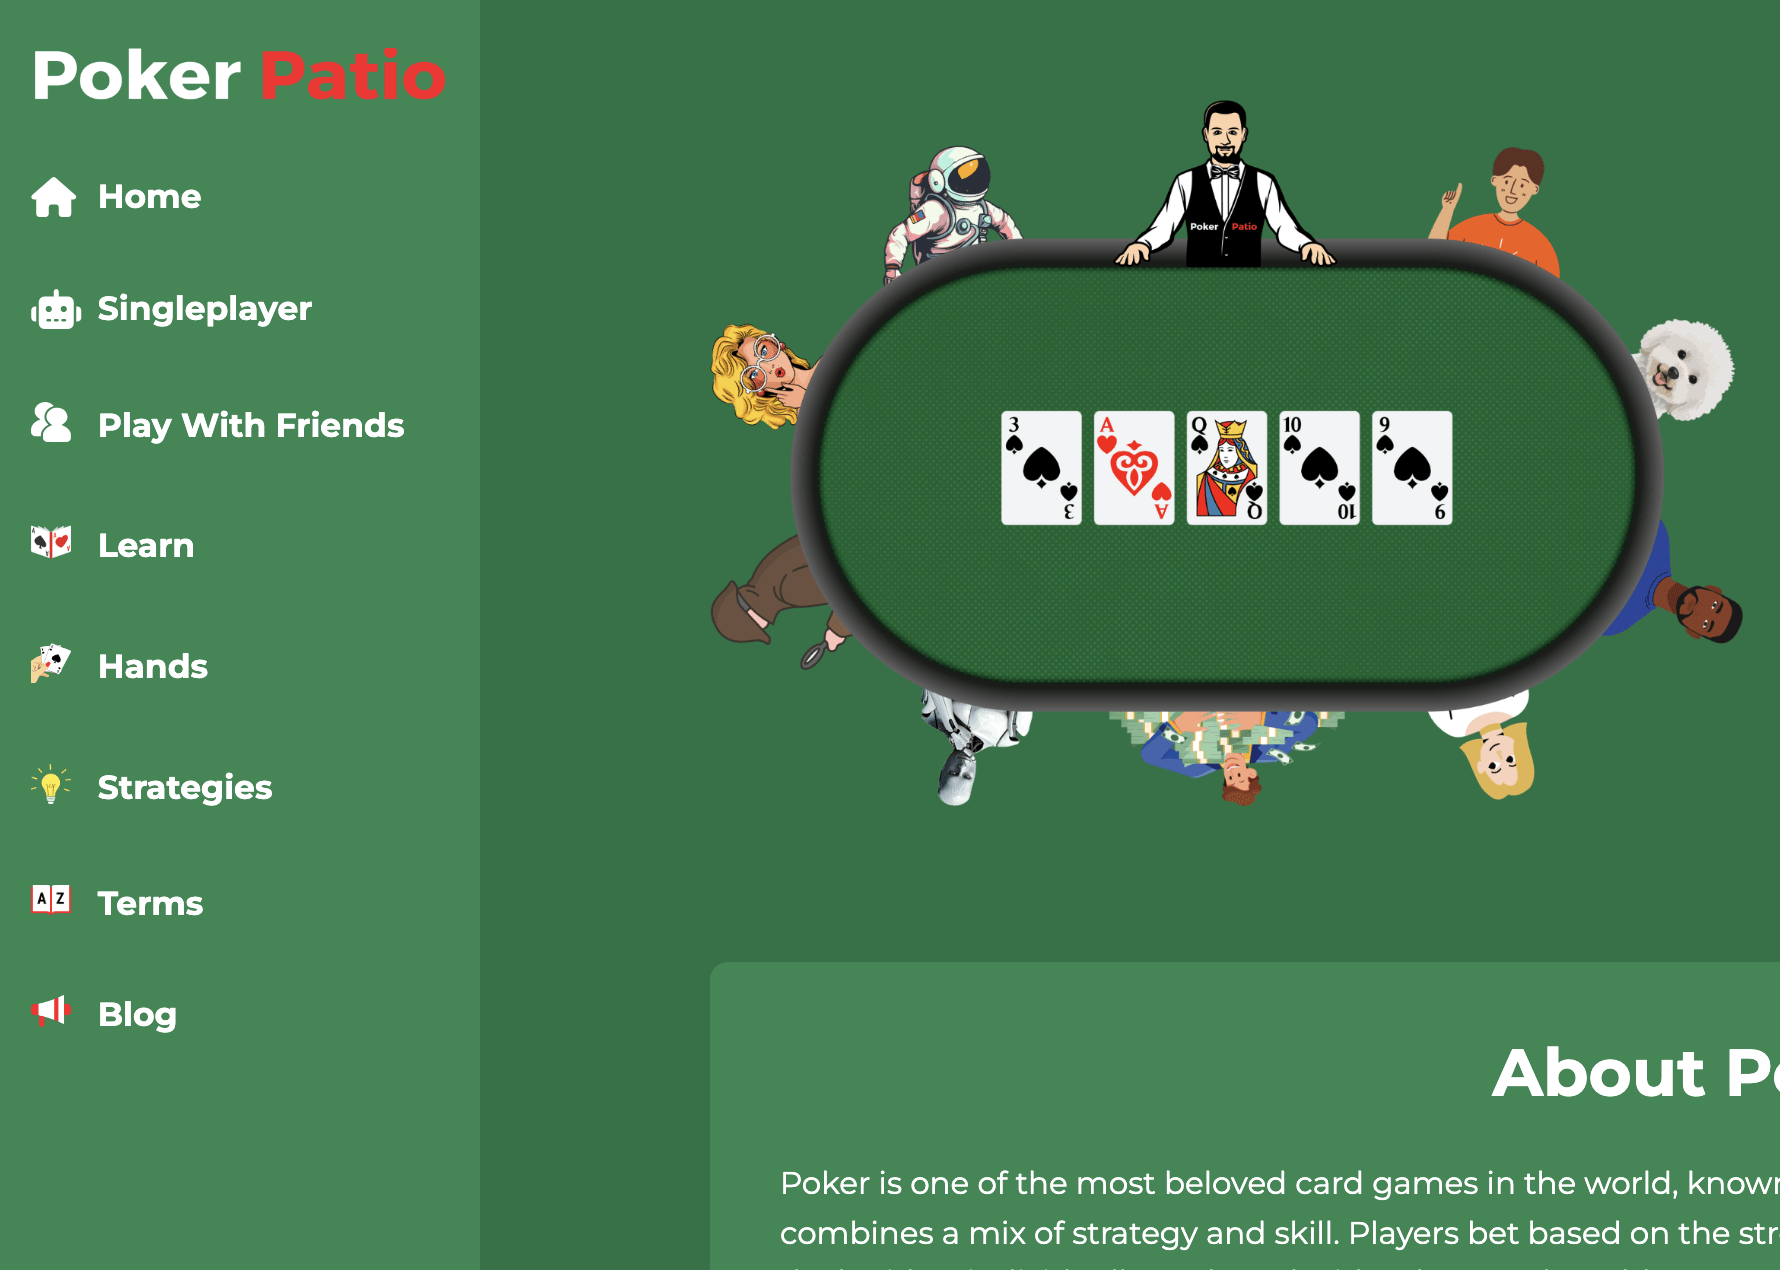 Poker Patio